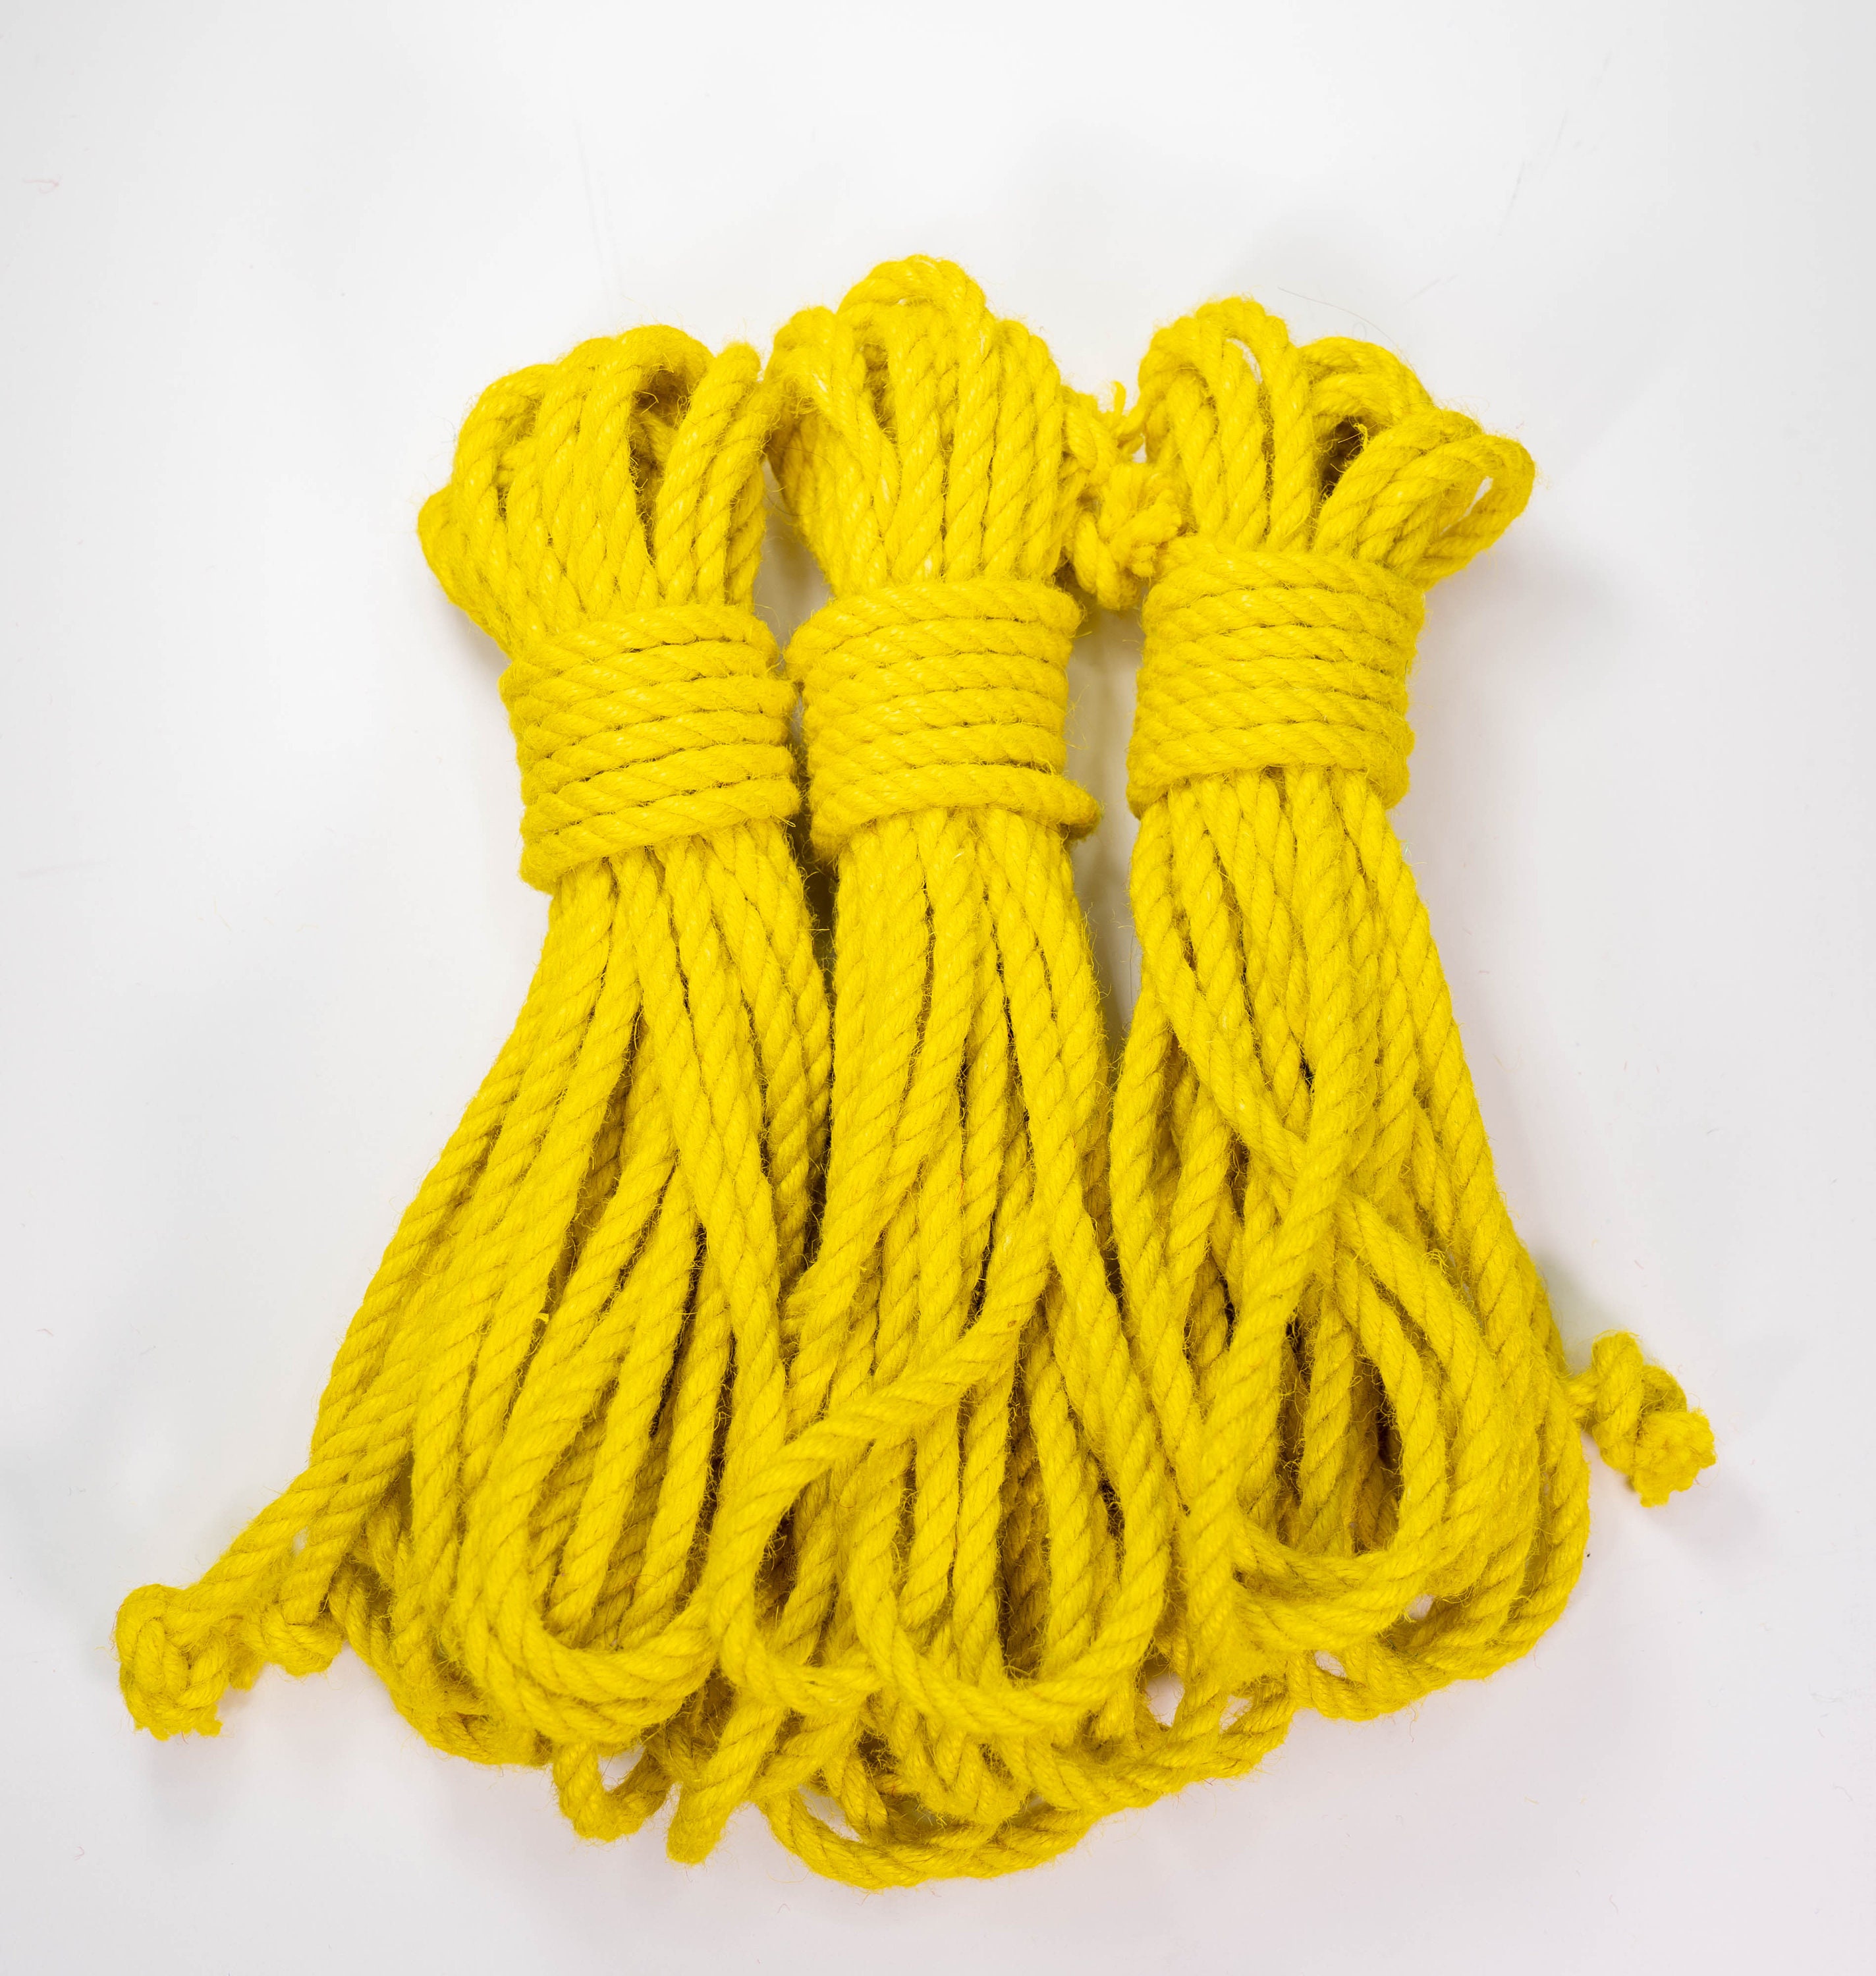 Yellow Jute Rope for Bondage 